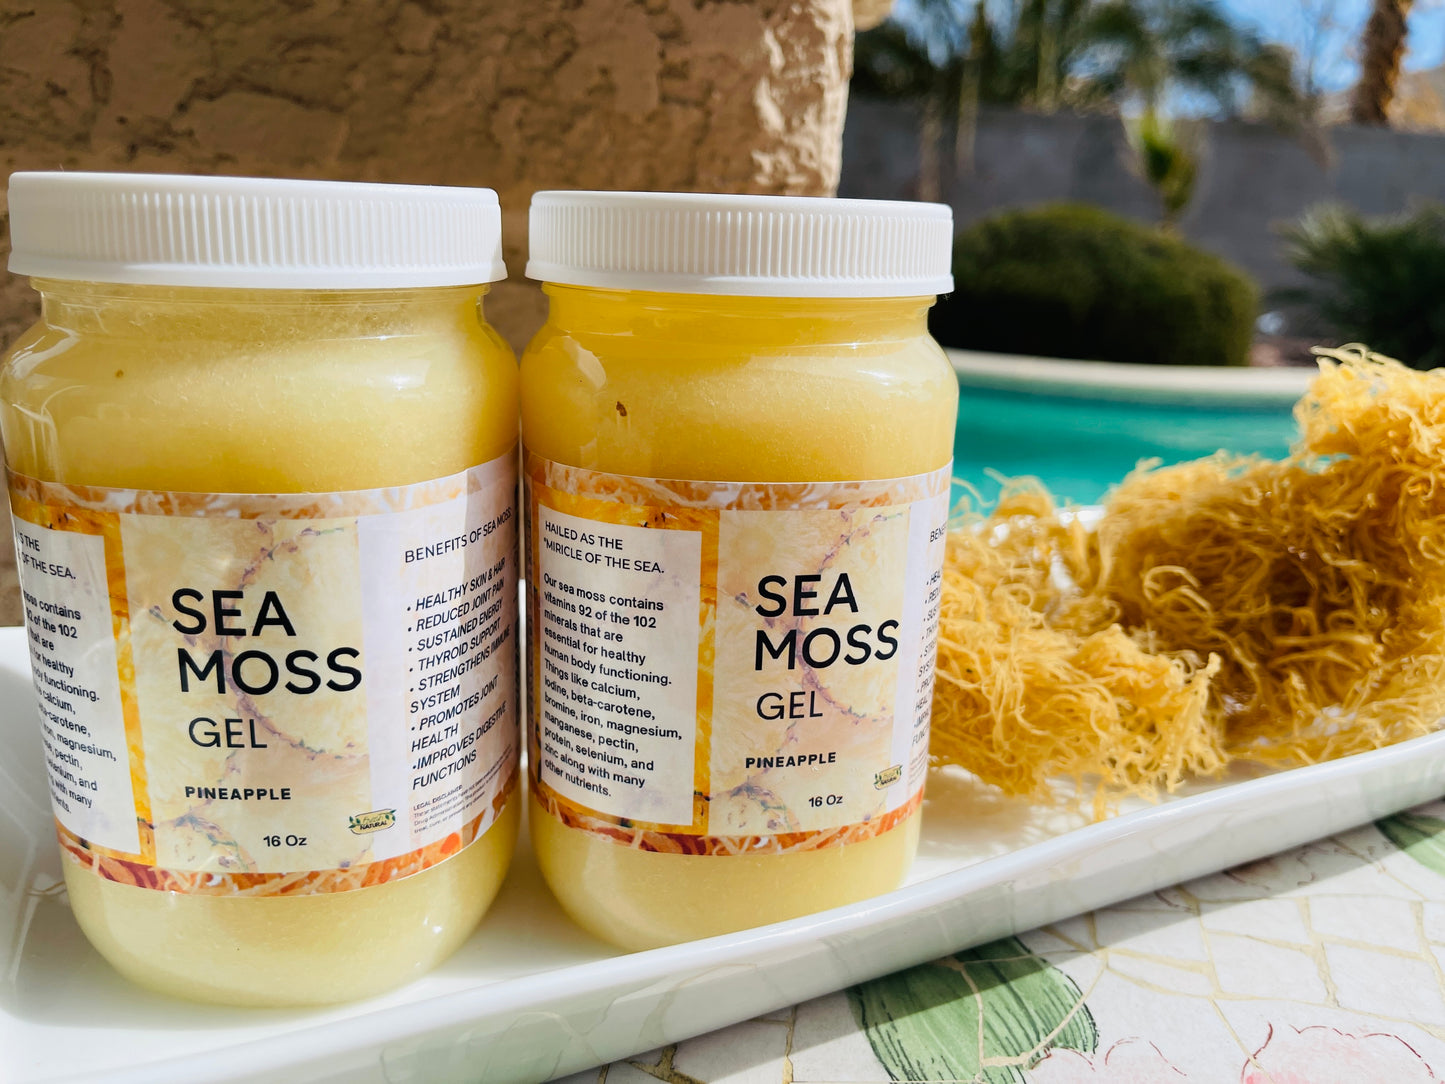 Sea Moss Gel Pineapple Flavored | 100% Natural Organic | Helps Boost Immunity, Digestion, Metabolism | Pineapple Sea Moss Gel - 16Oz